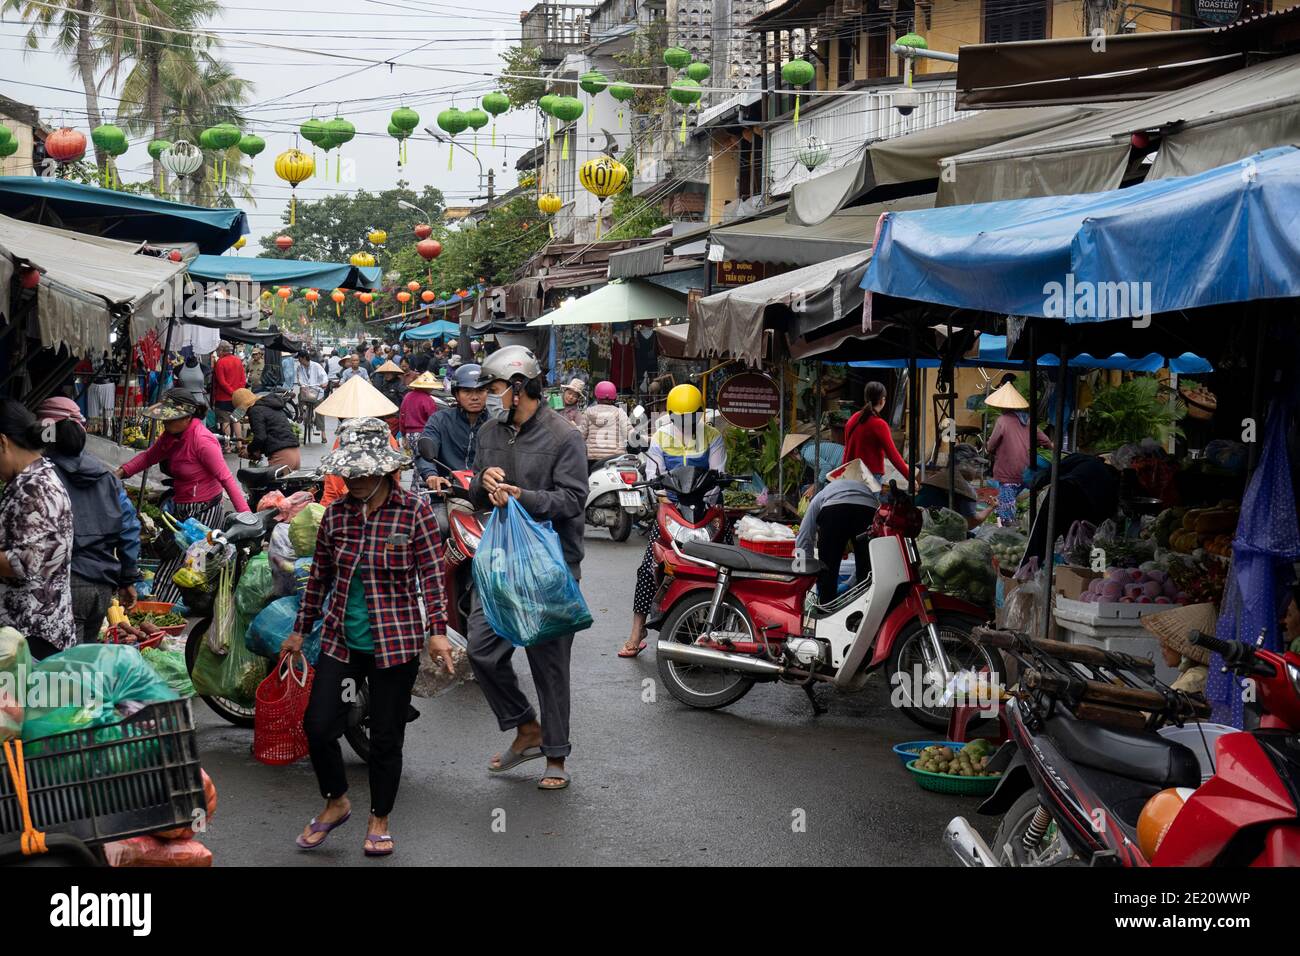 Busy street market in Vietnam Stock Photo